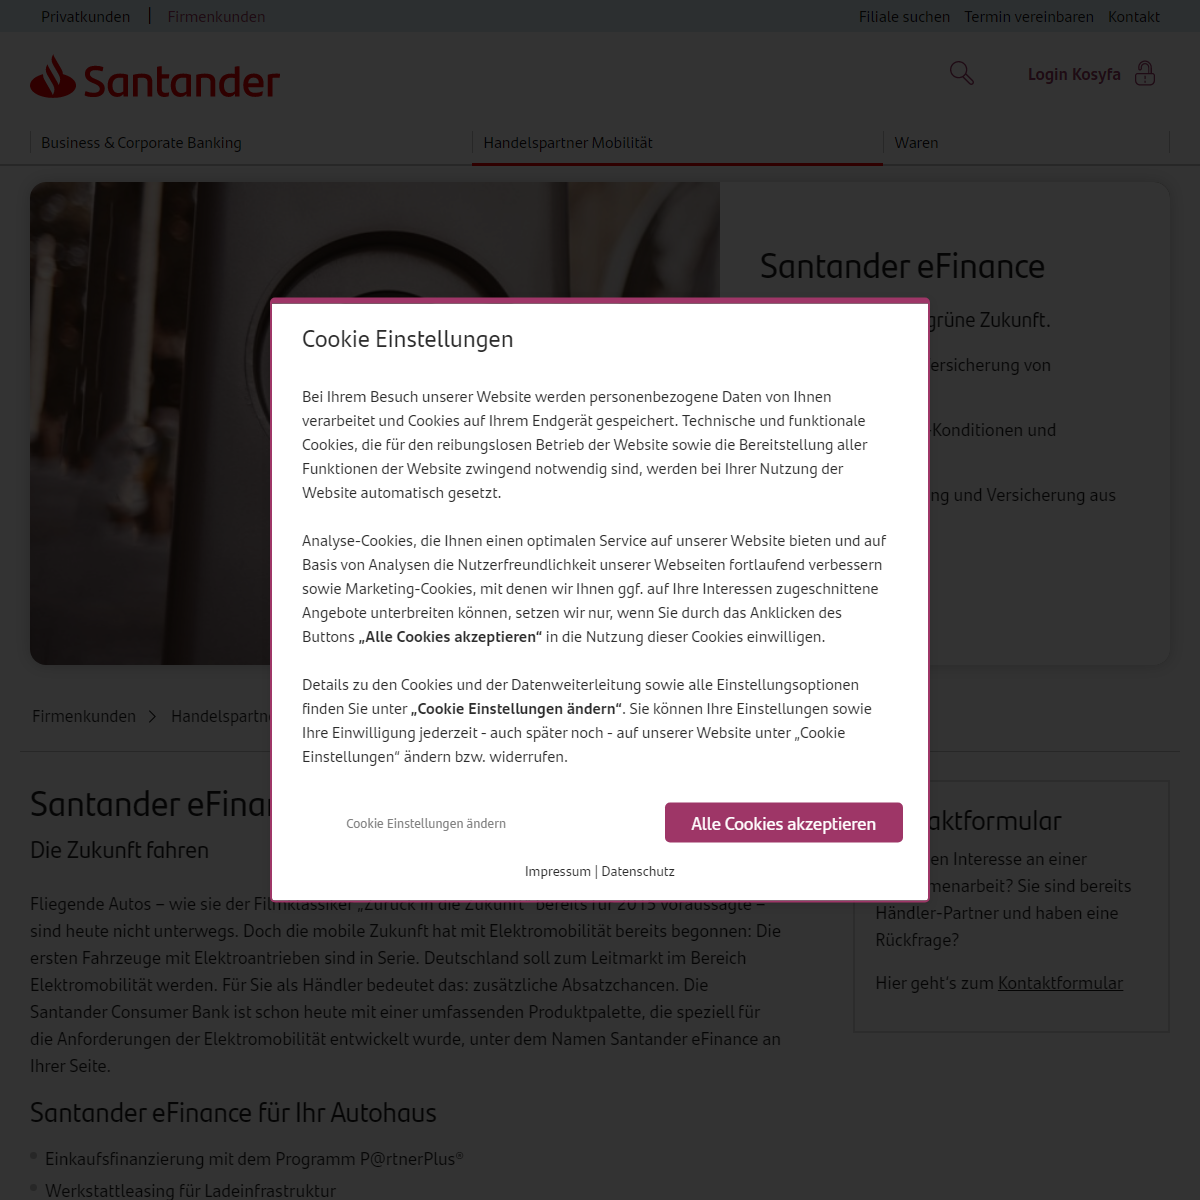 A complete backup of https://www.santander.de/firmenkunden/mobilitaet/produkte/absatzfinanzierung/santander-efinance/